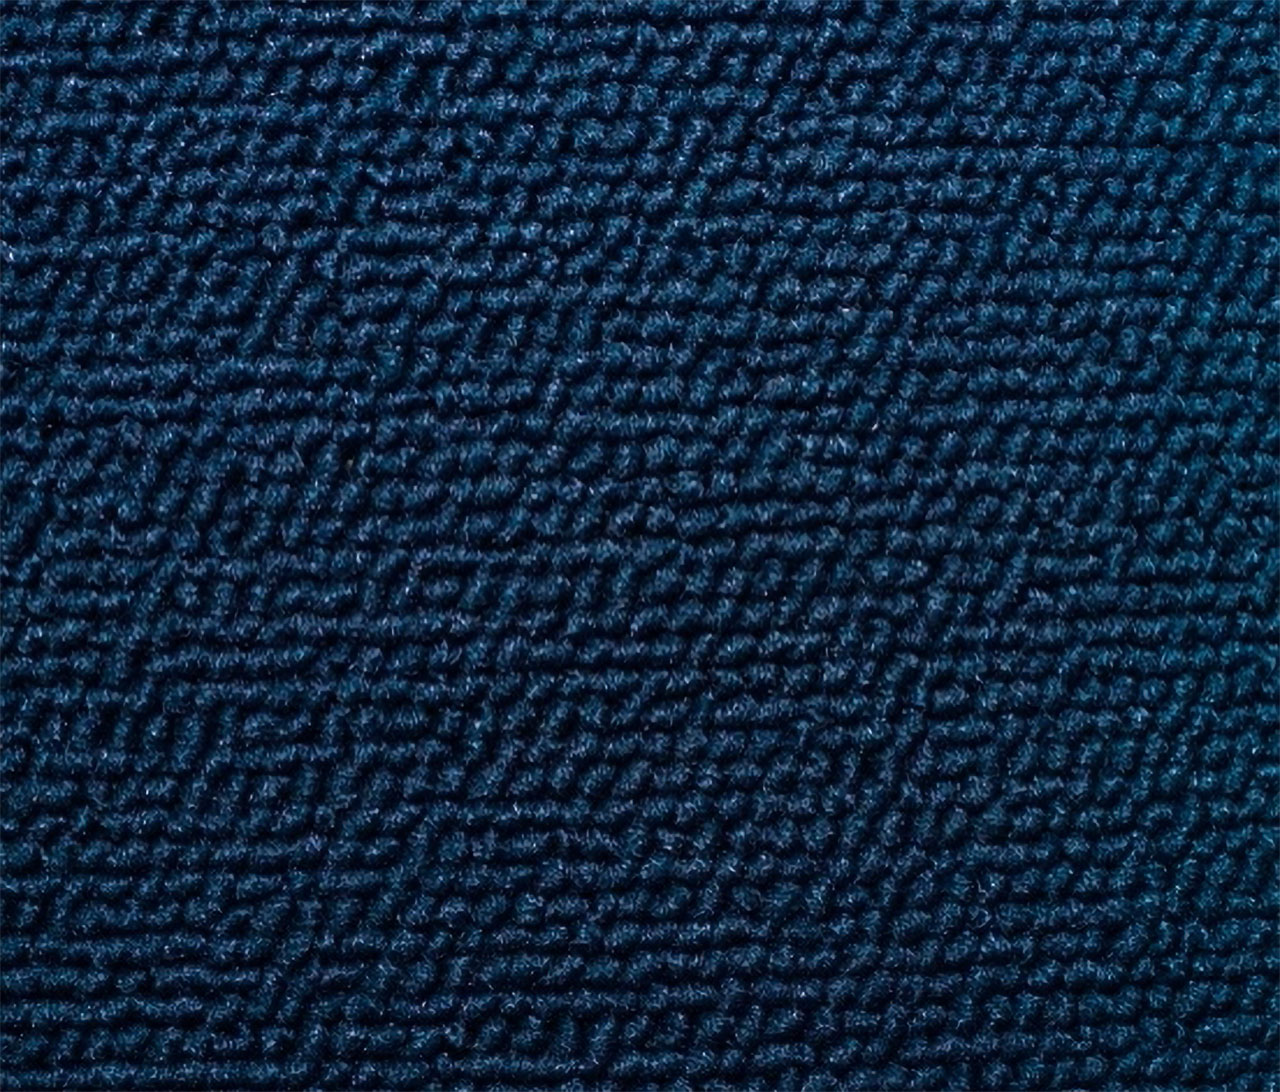 Holden Standard HD Standard Ute E05 Combine Blue Carpet (Image 1 of 1)